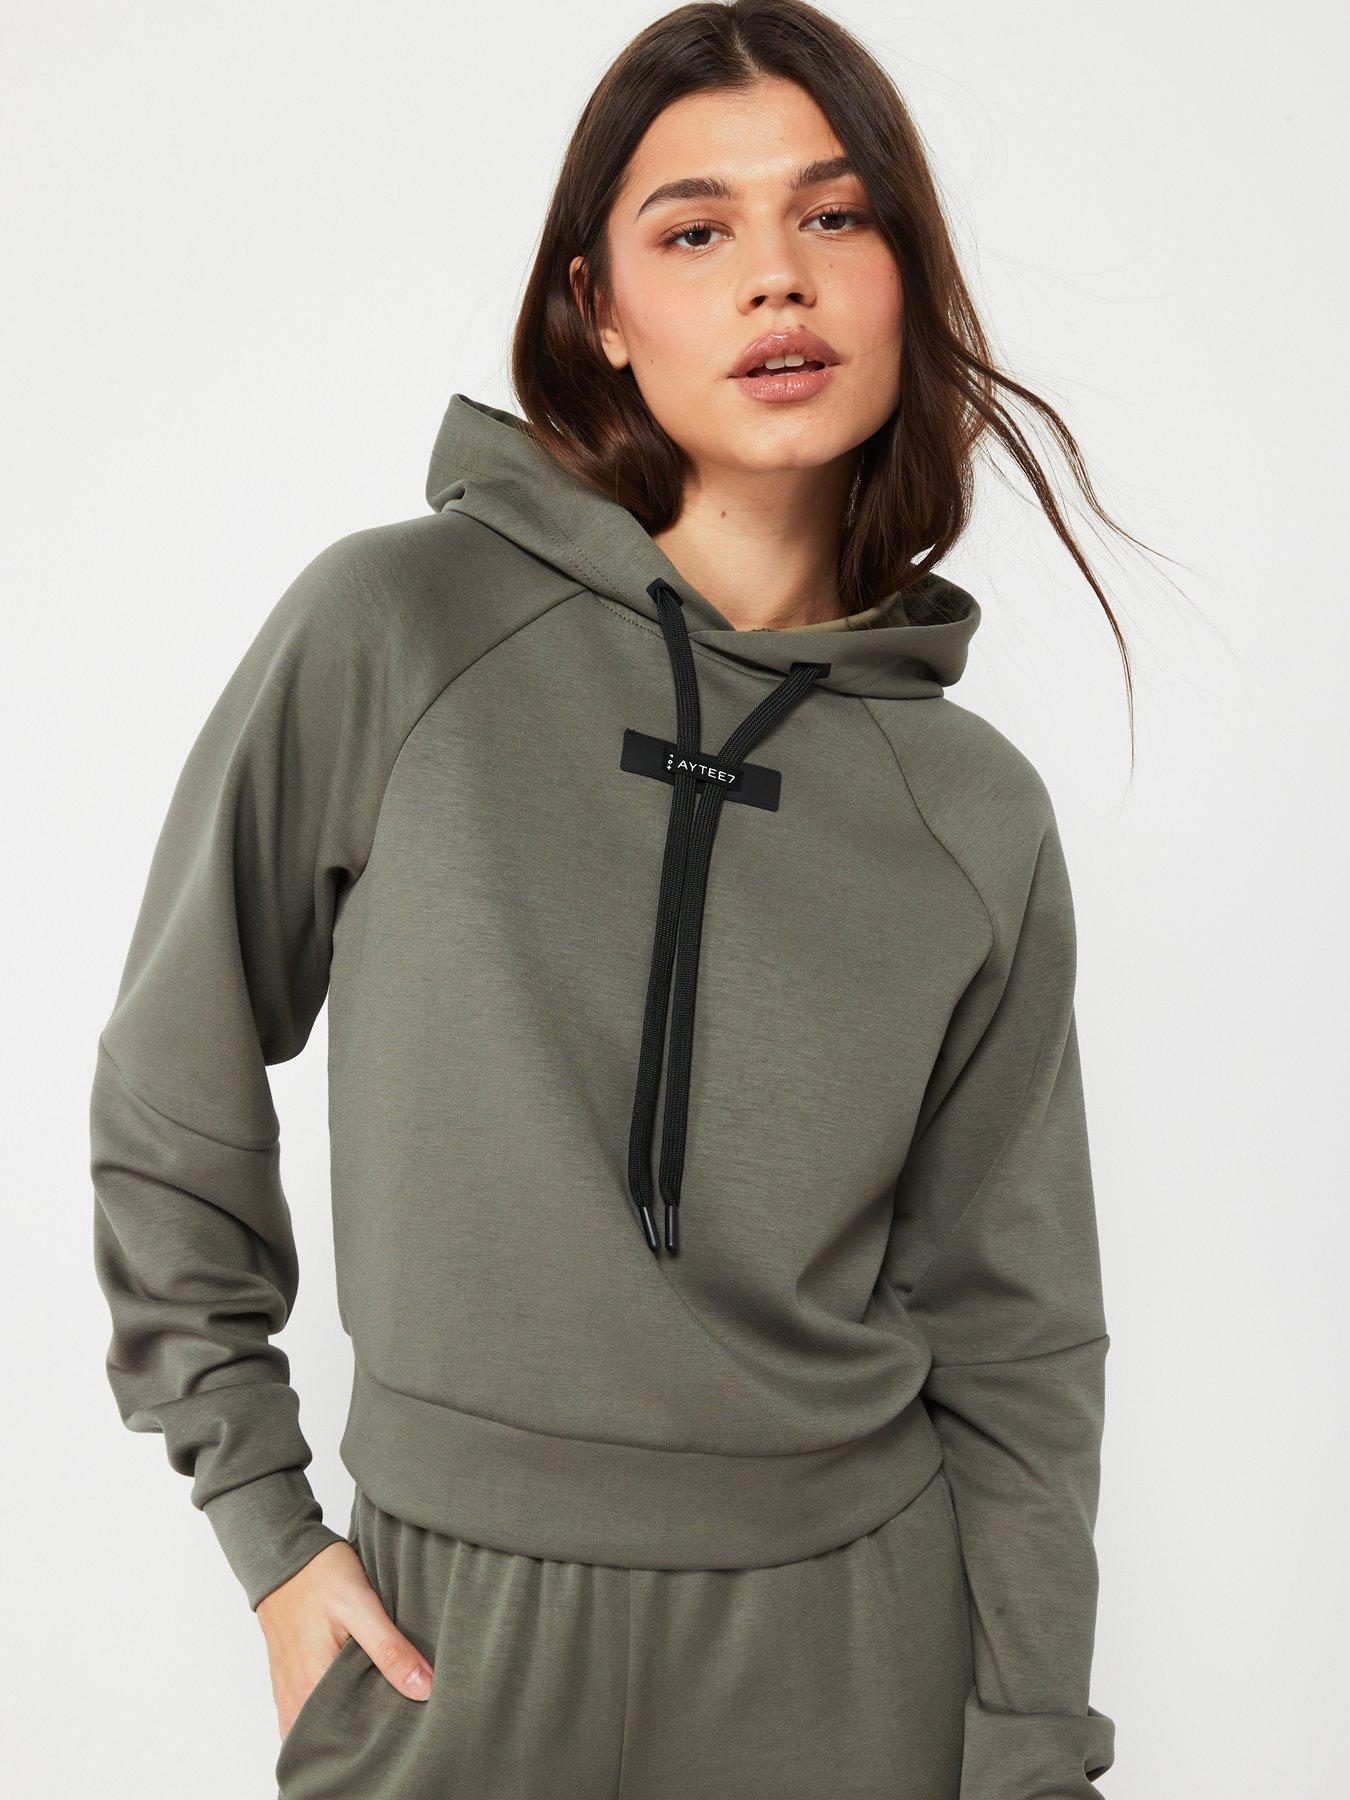 Women's Hoodies & Sweatshirts – Passenger